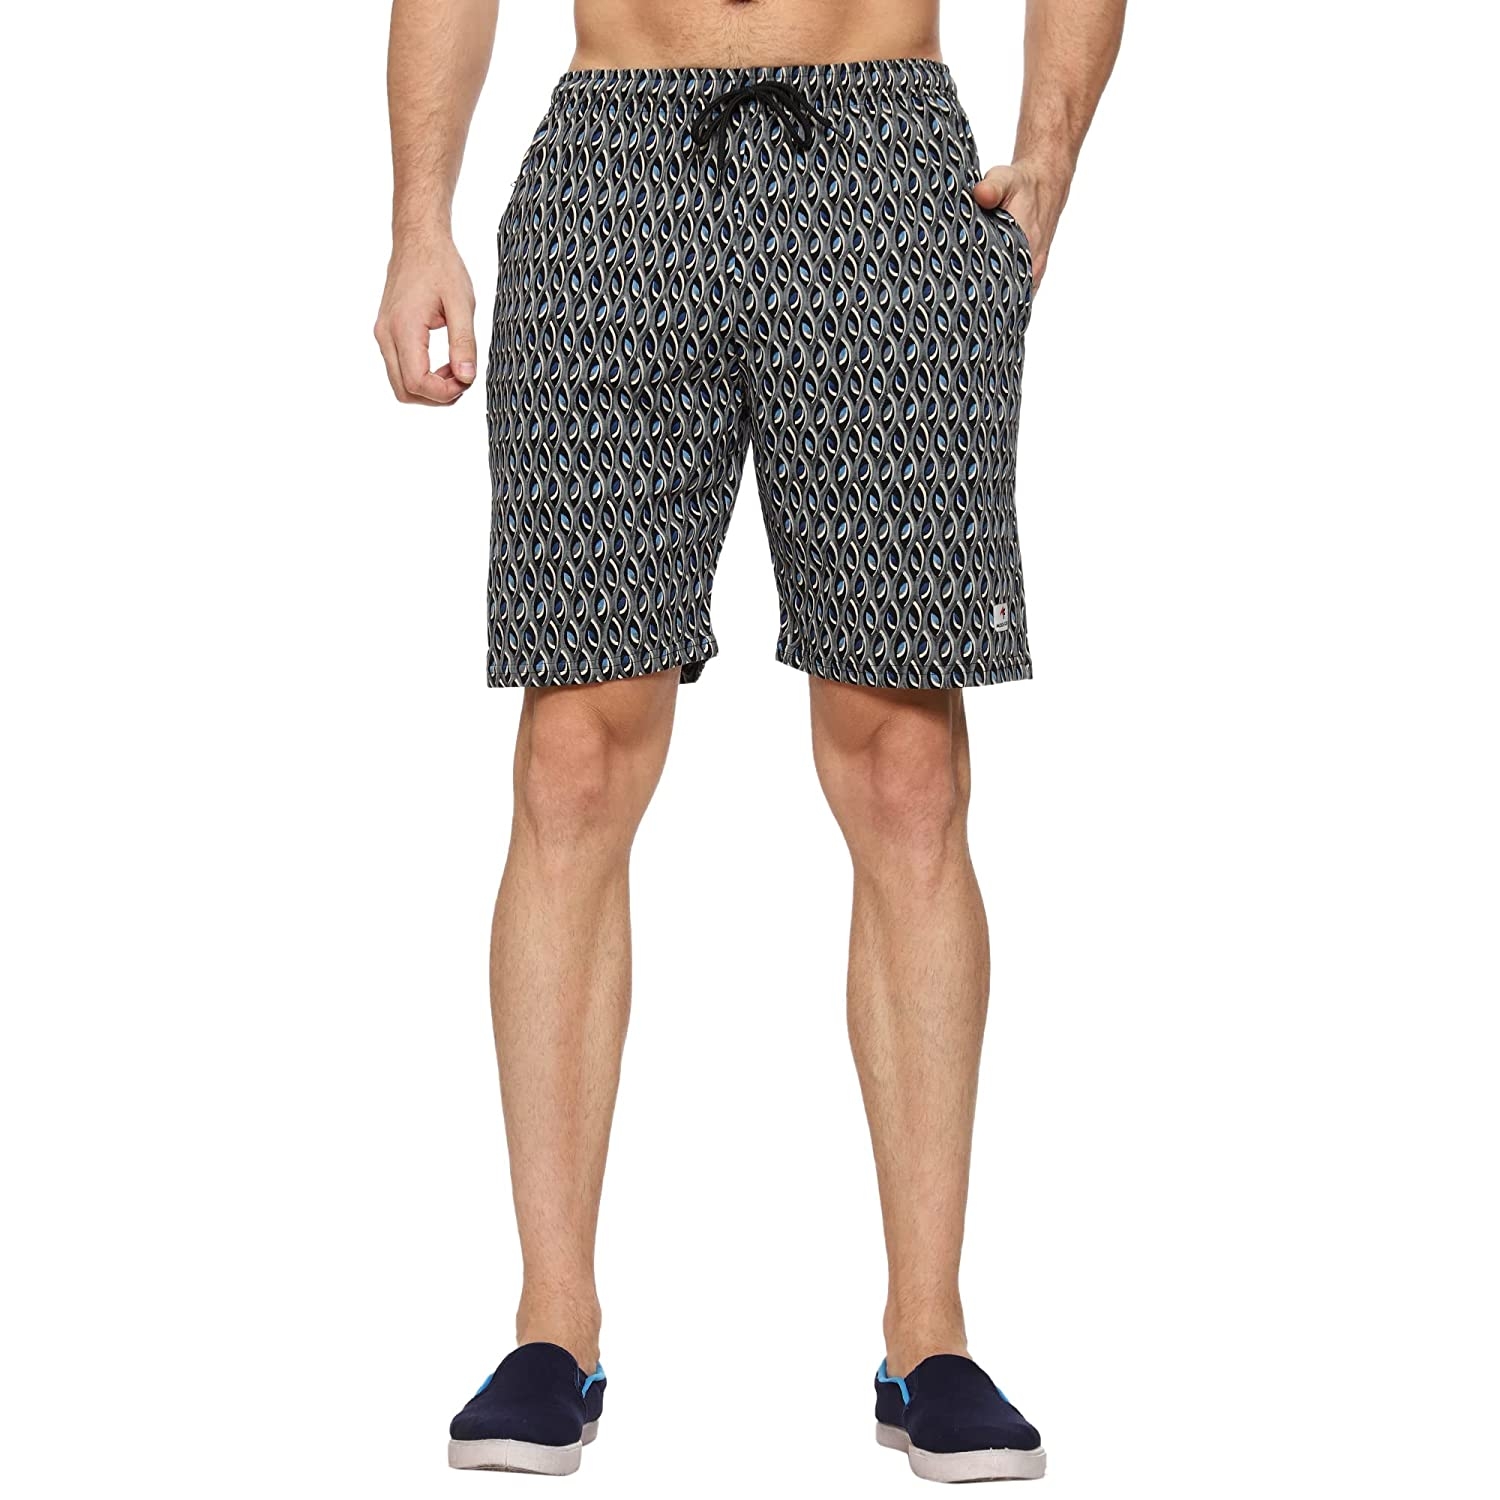 Moovfree Mens Cotton Bermuda Printed Casual Shorts Regular Fit Lounge Shorts with Zip Pockets, Choco Blue